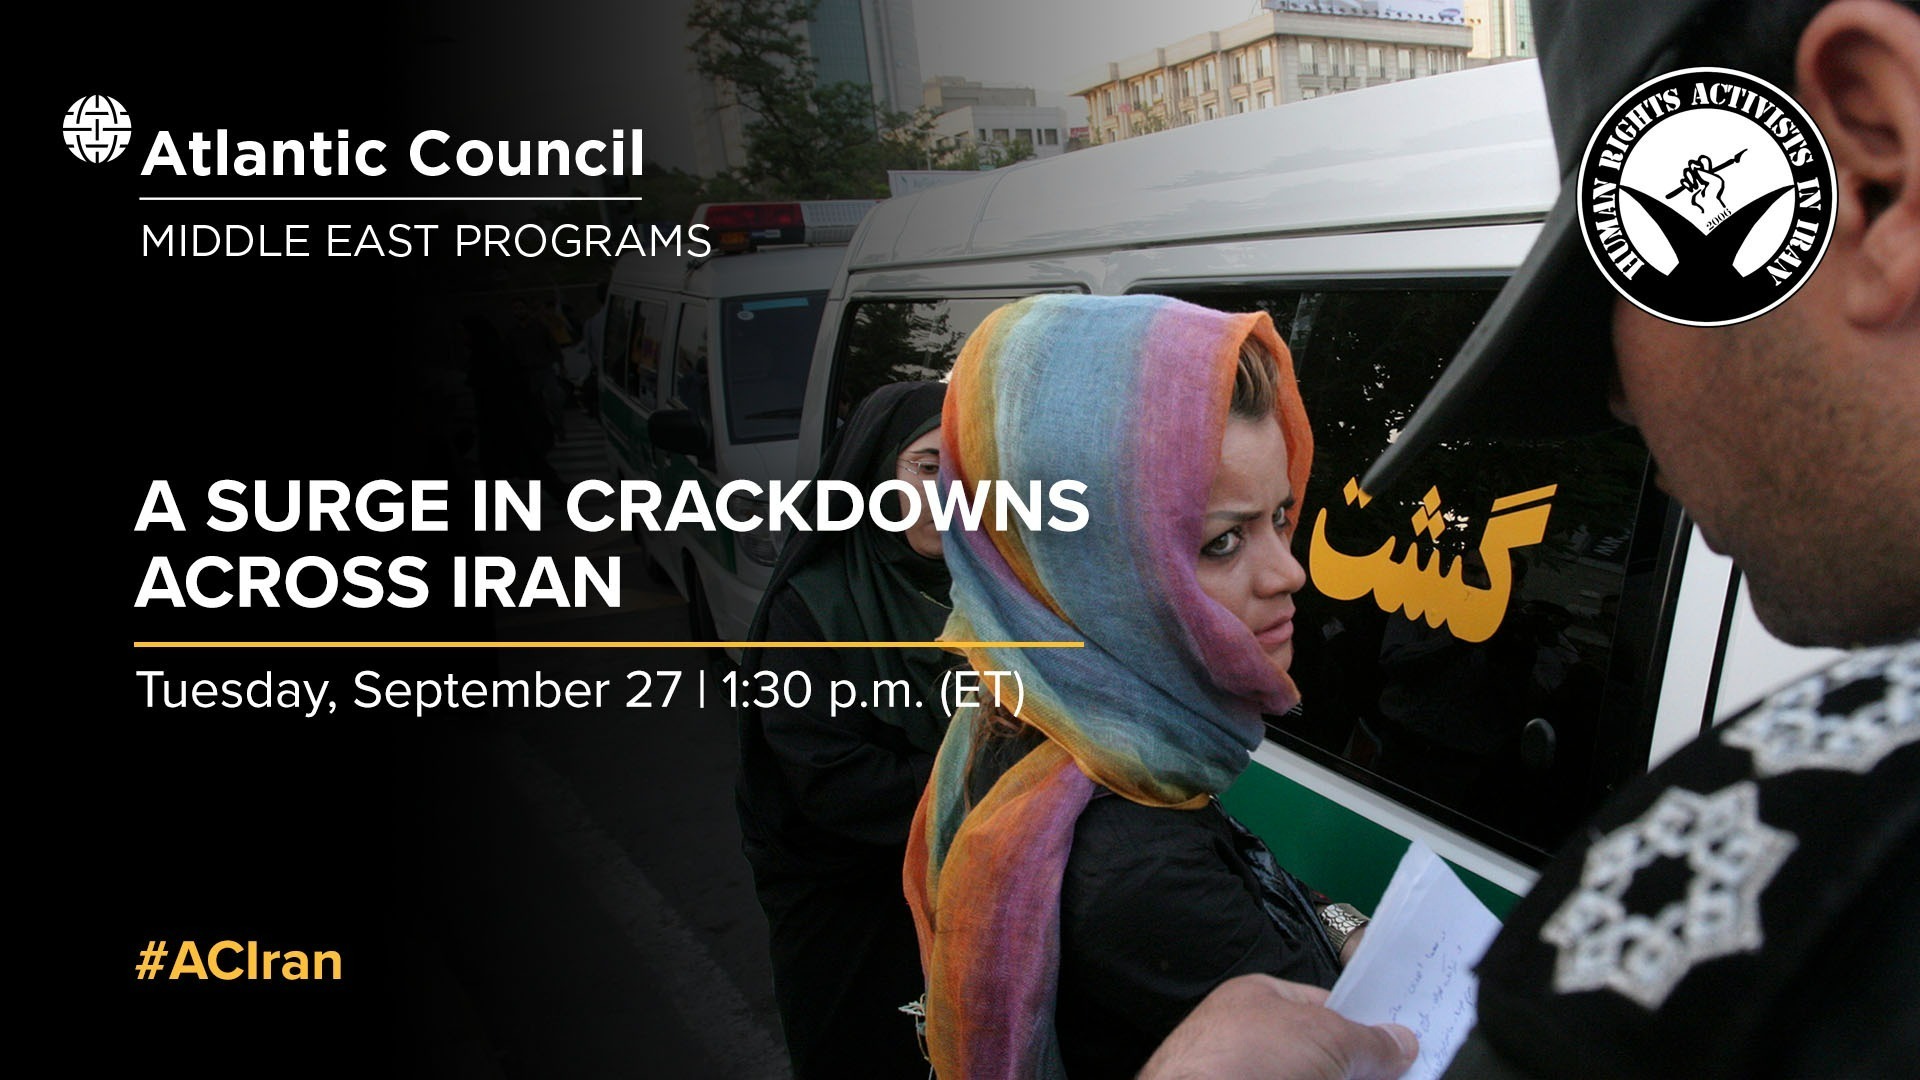 Sept 27, 1:30 ET: A surge in crackdowns across Iran – Atlantic Council